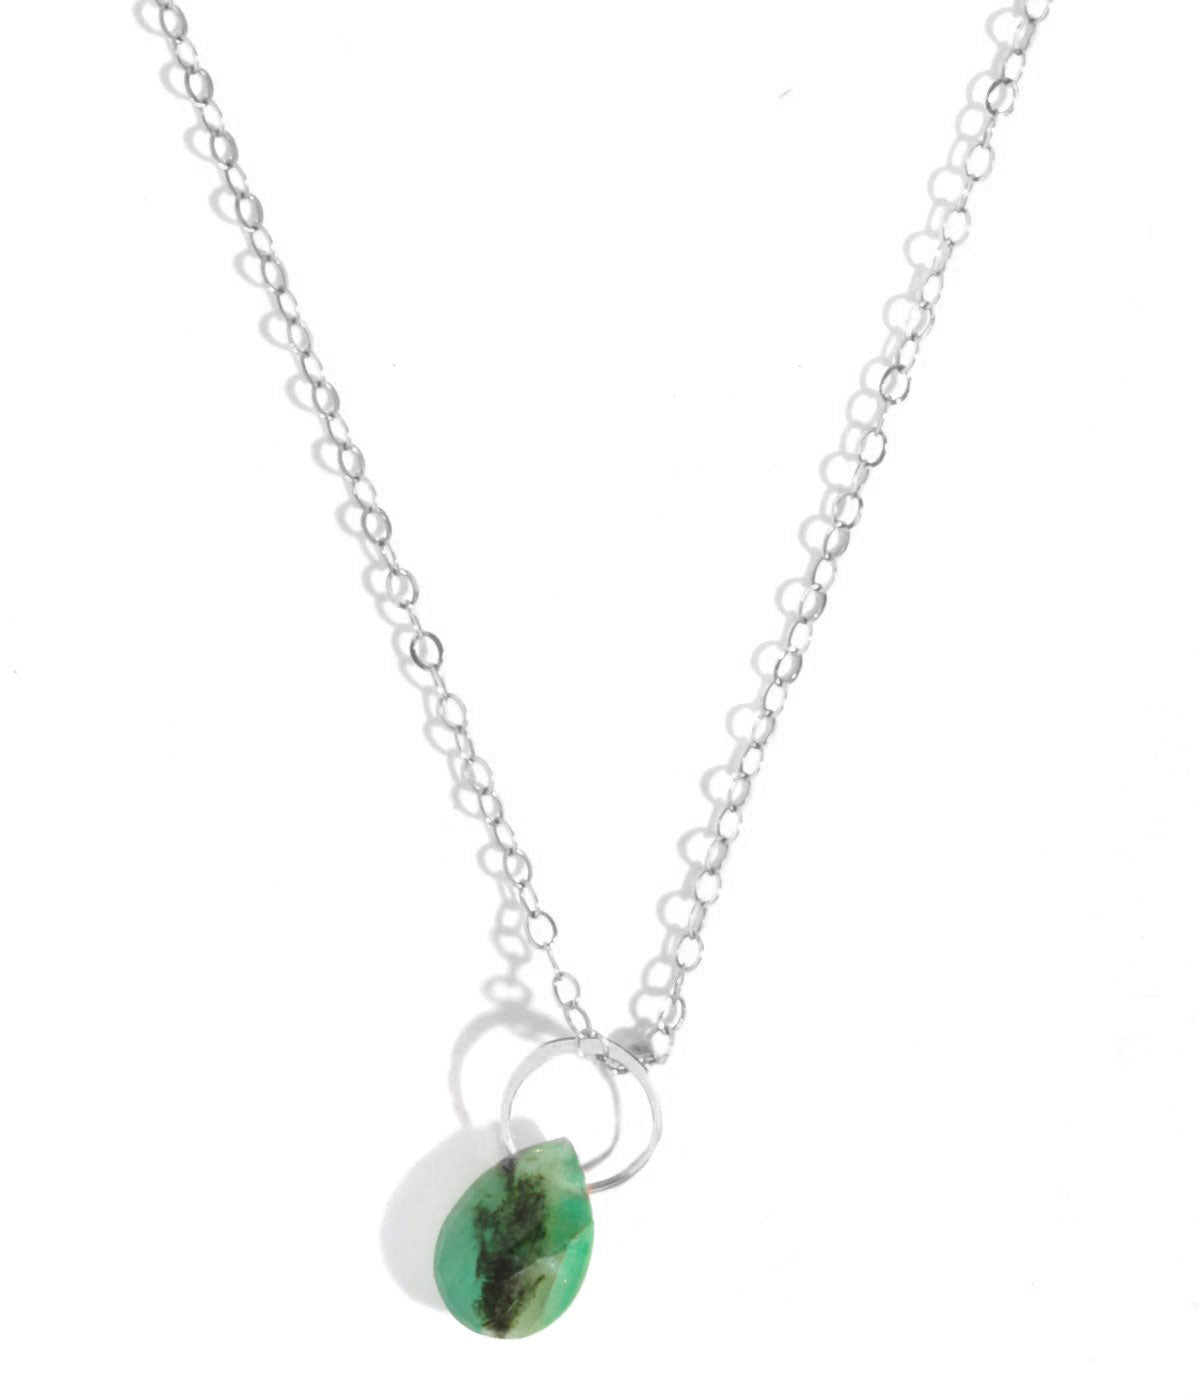 Single emerald drop necklace - Melissa Joy Manning Jewelry